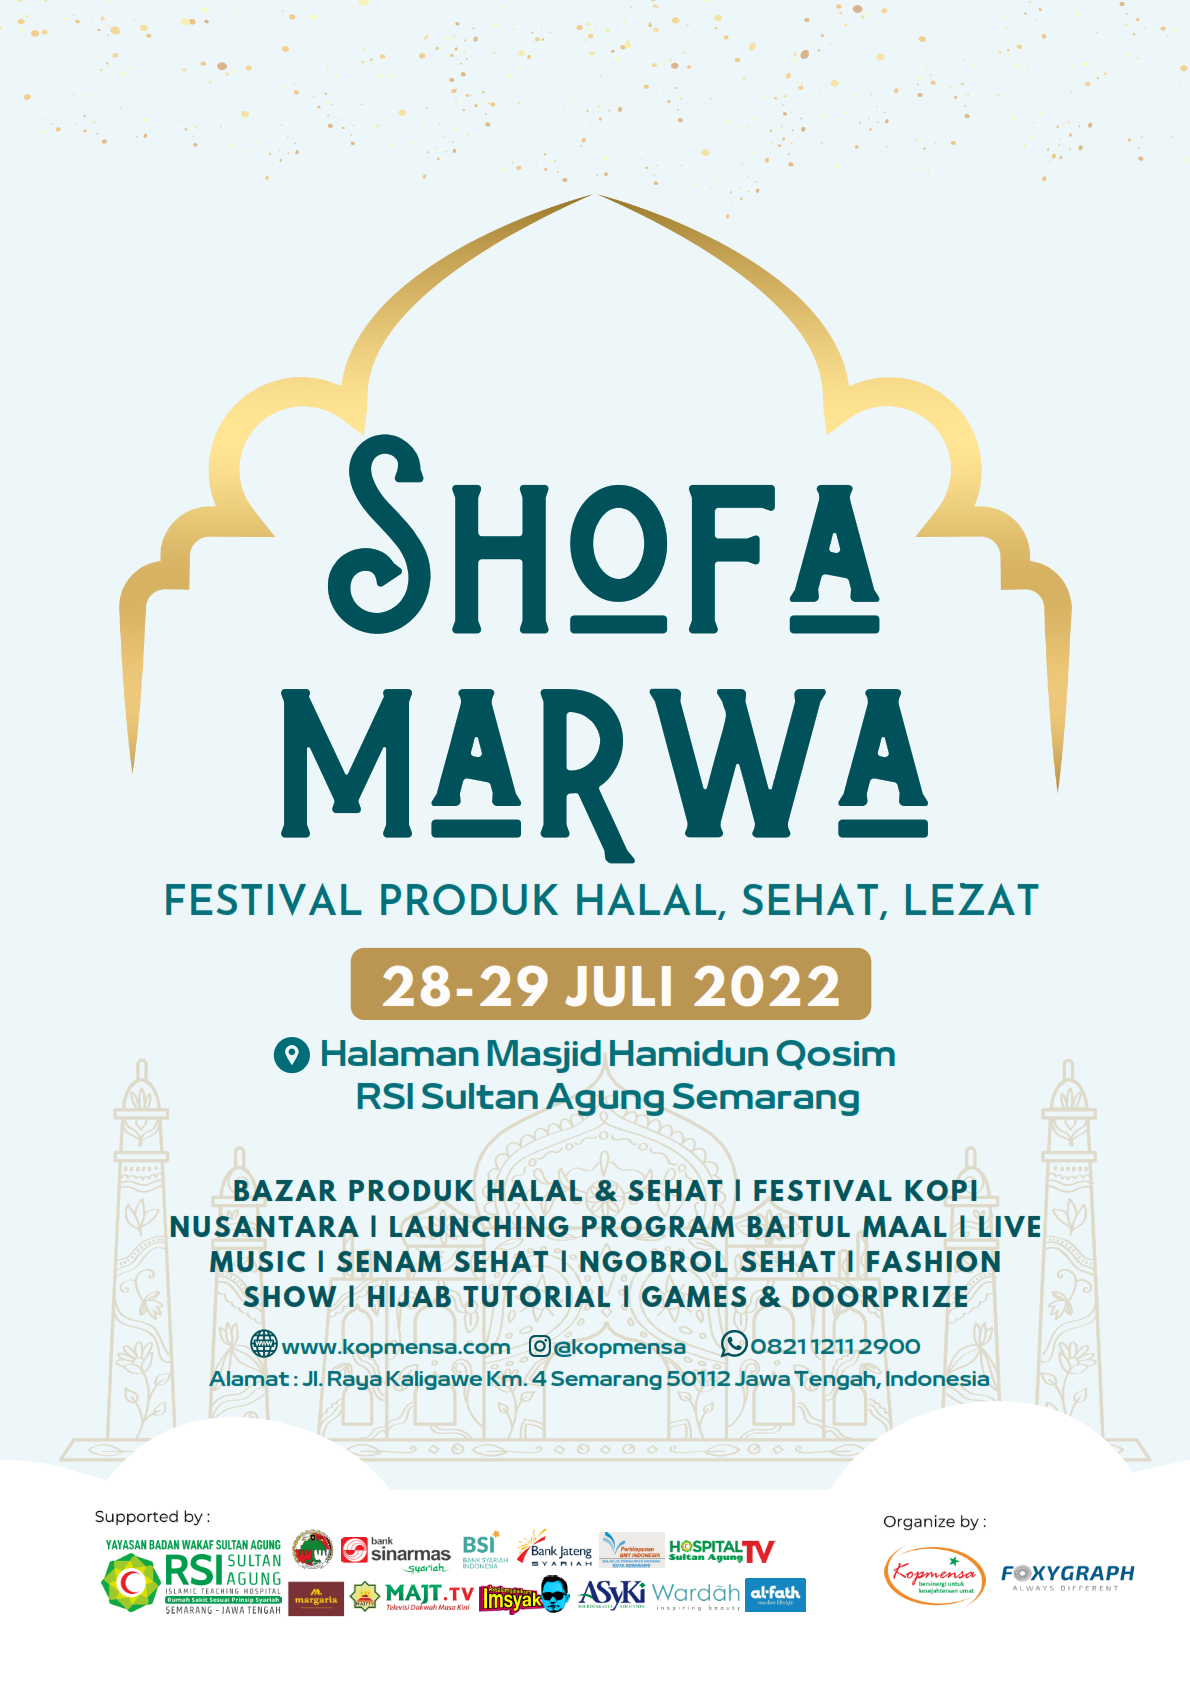 Festival Shofa Marwa, Festival Produk Halal, Sehat, dan Lezat Persembahan Kopmensa